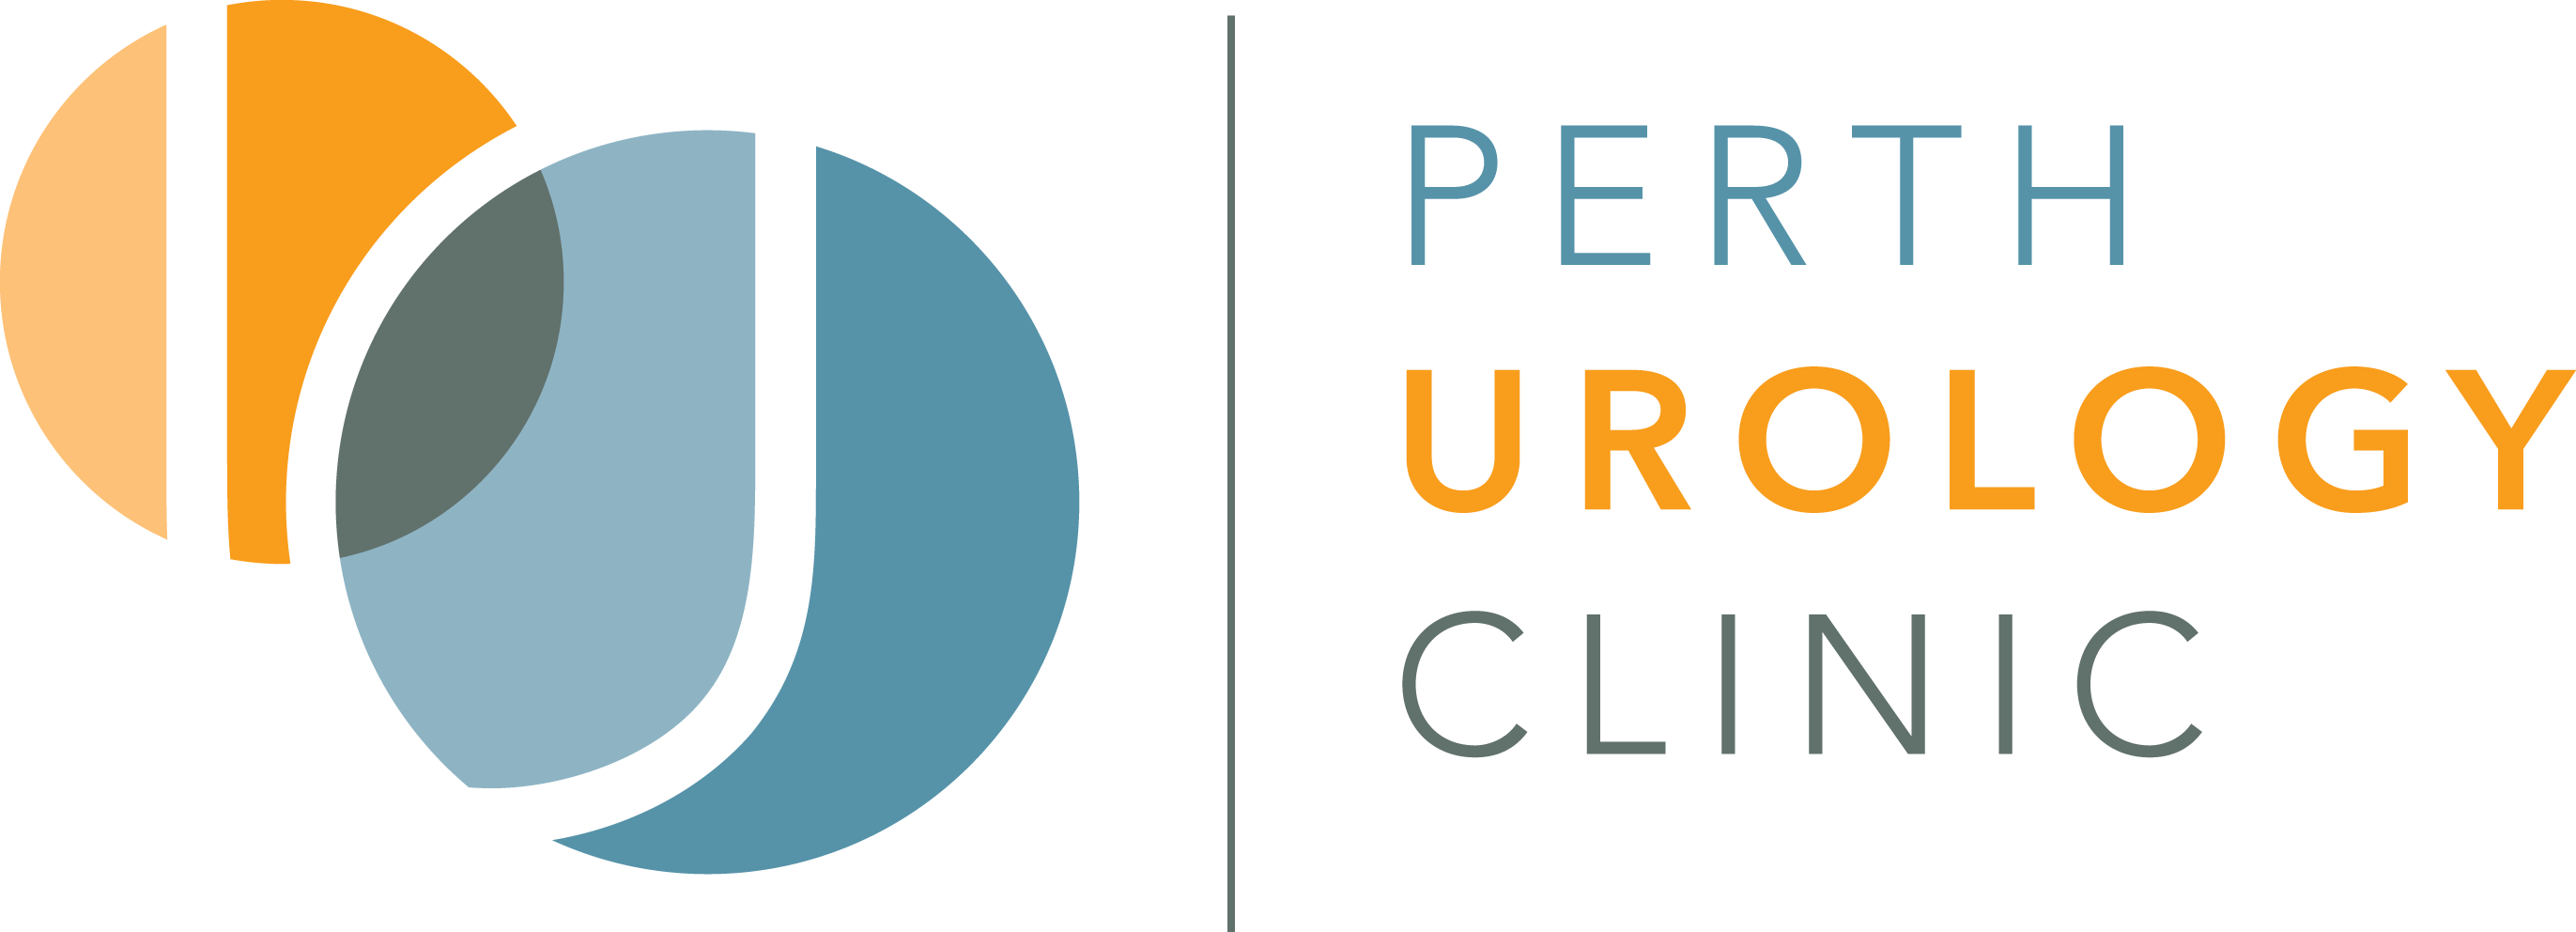 Perth Urology Clinic